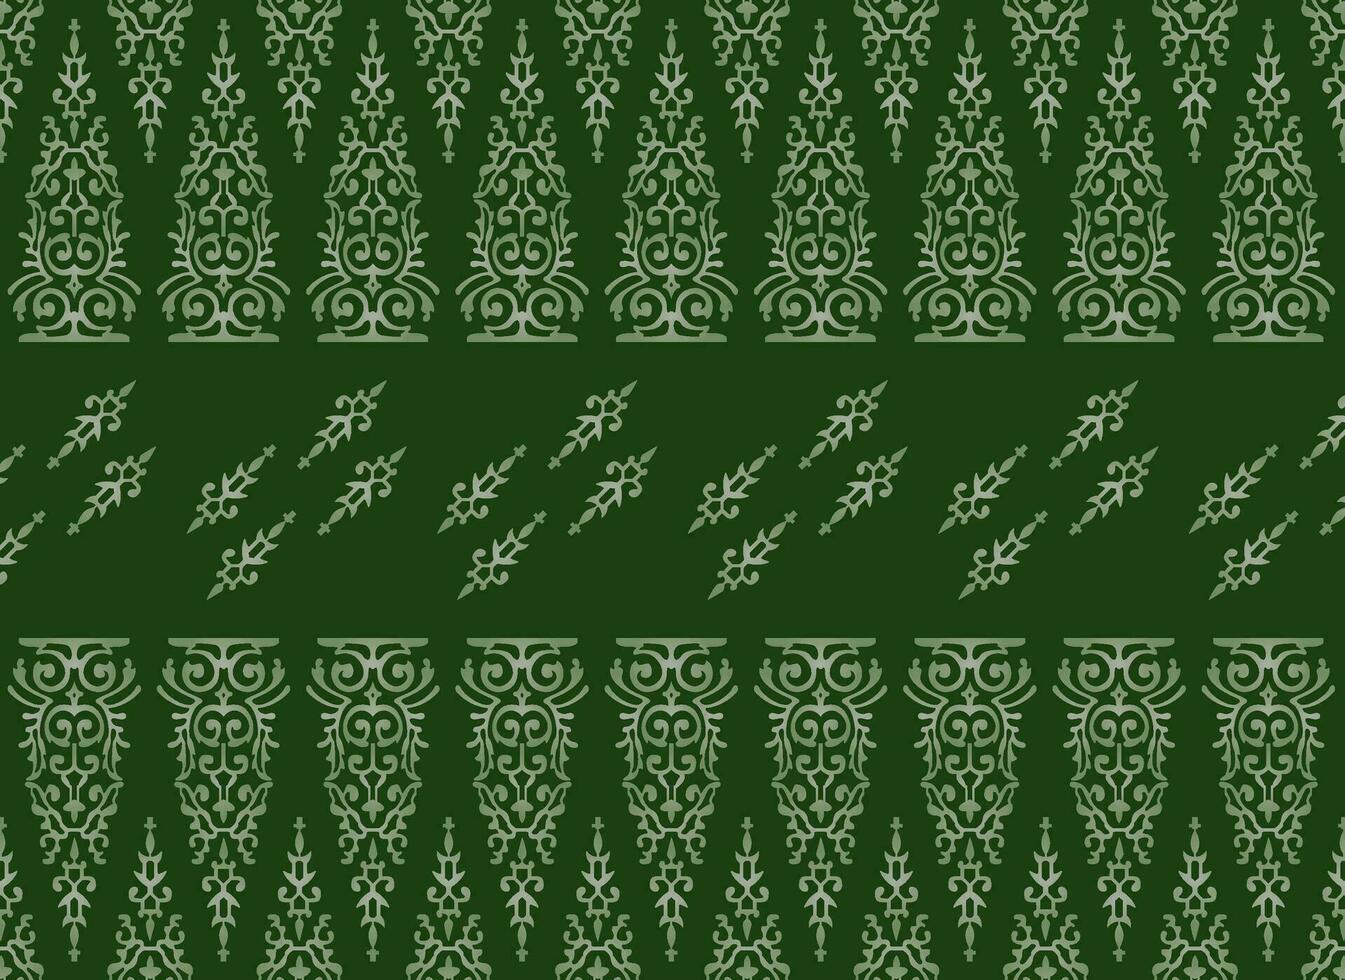 batik modelo pucuk reprendido kuntum dewa riau, sumatera Indonesia. batik modelo tradicional melayu vector ilustración o Songket tenun malayo decoración